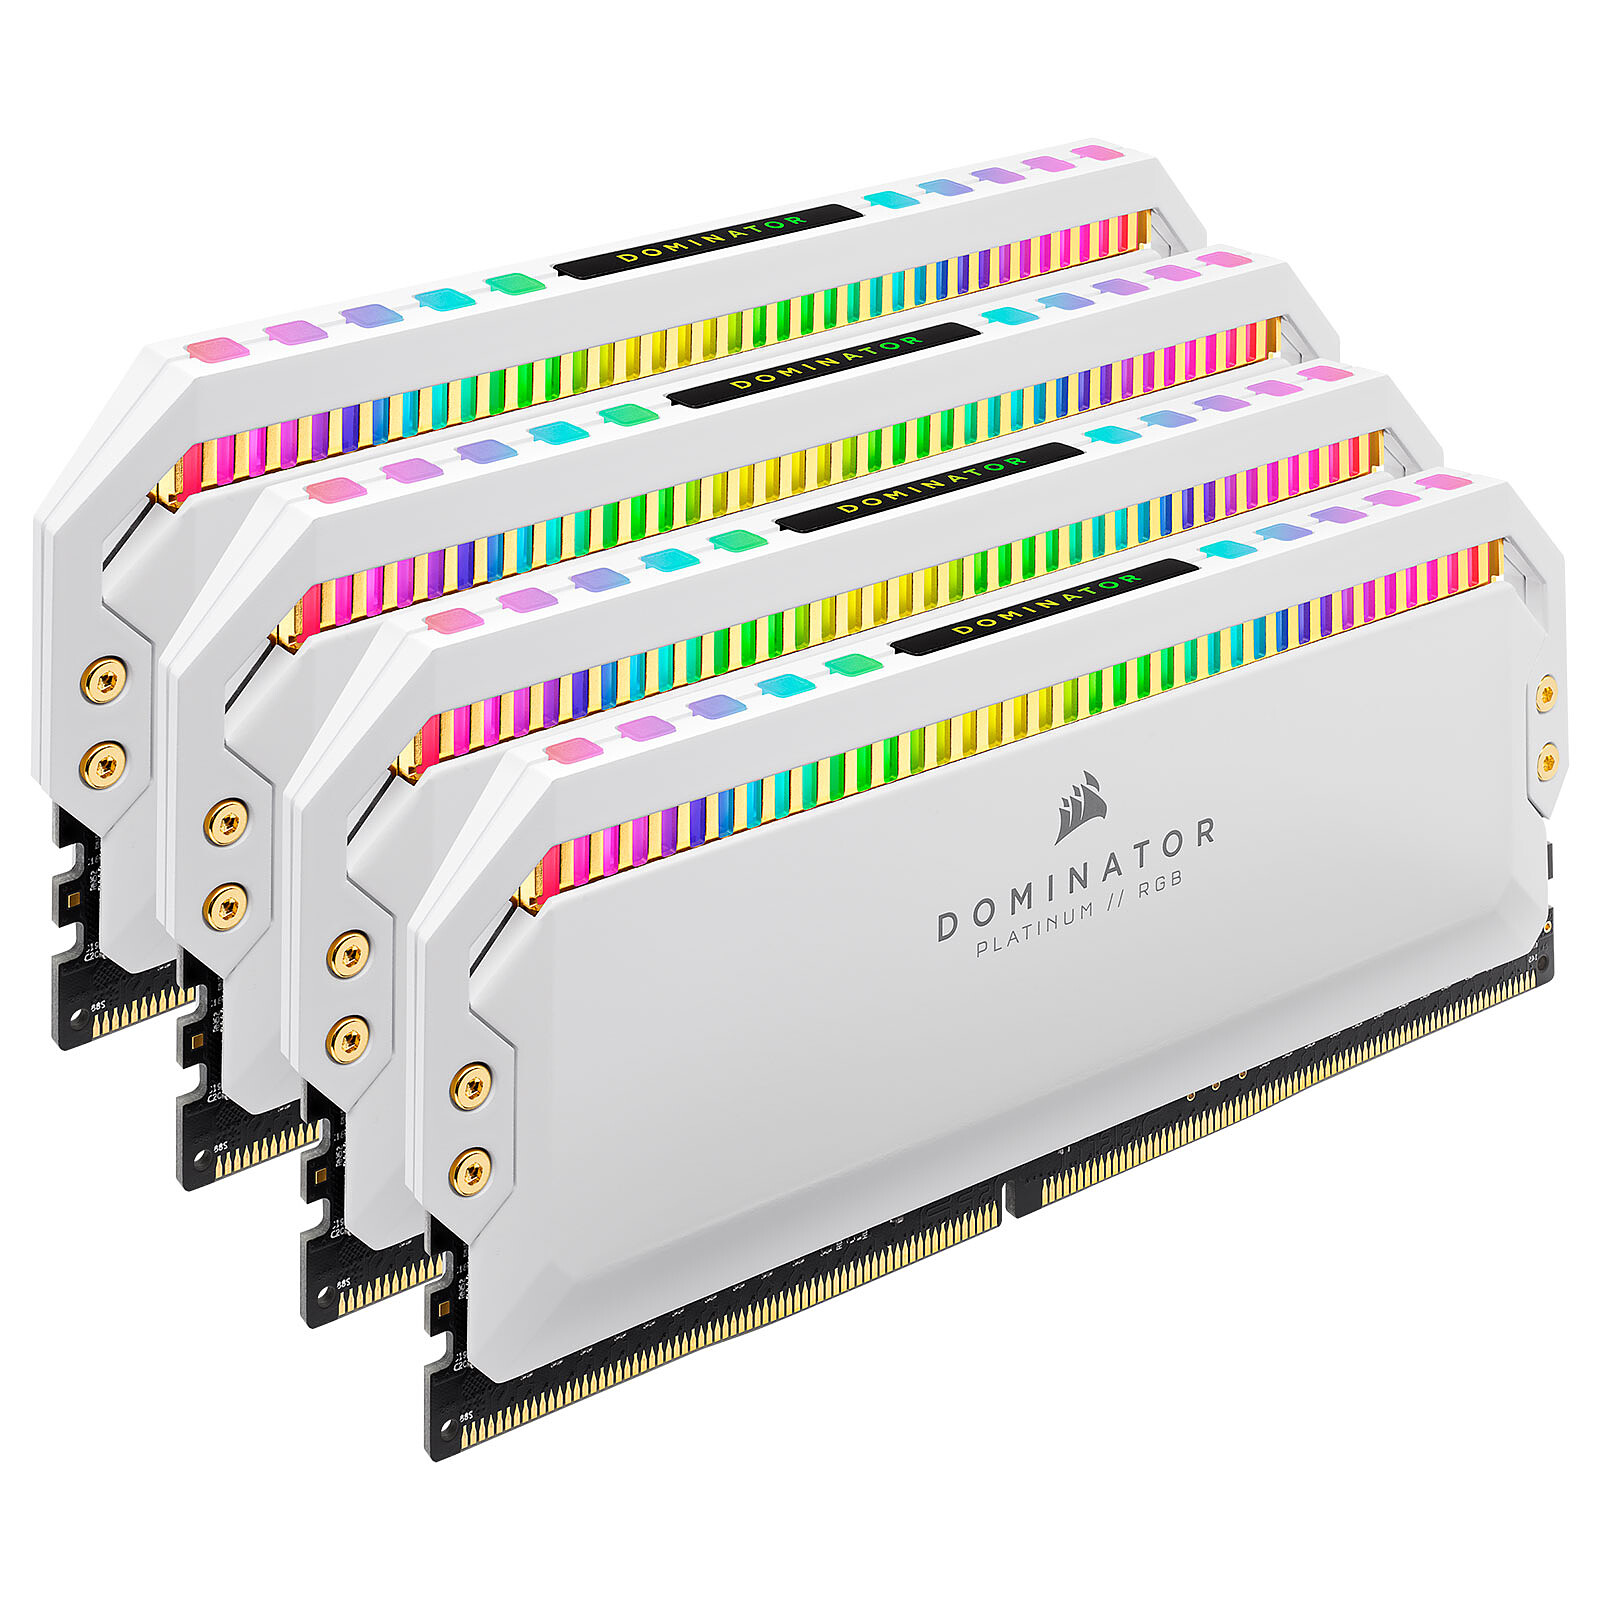 Corsair Dominator Platinum RGB 64 GB (4 x 16 GB) DDR4 3200 MHz CL16 - White